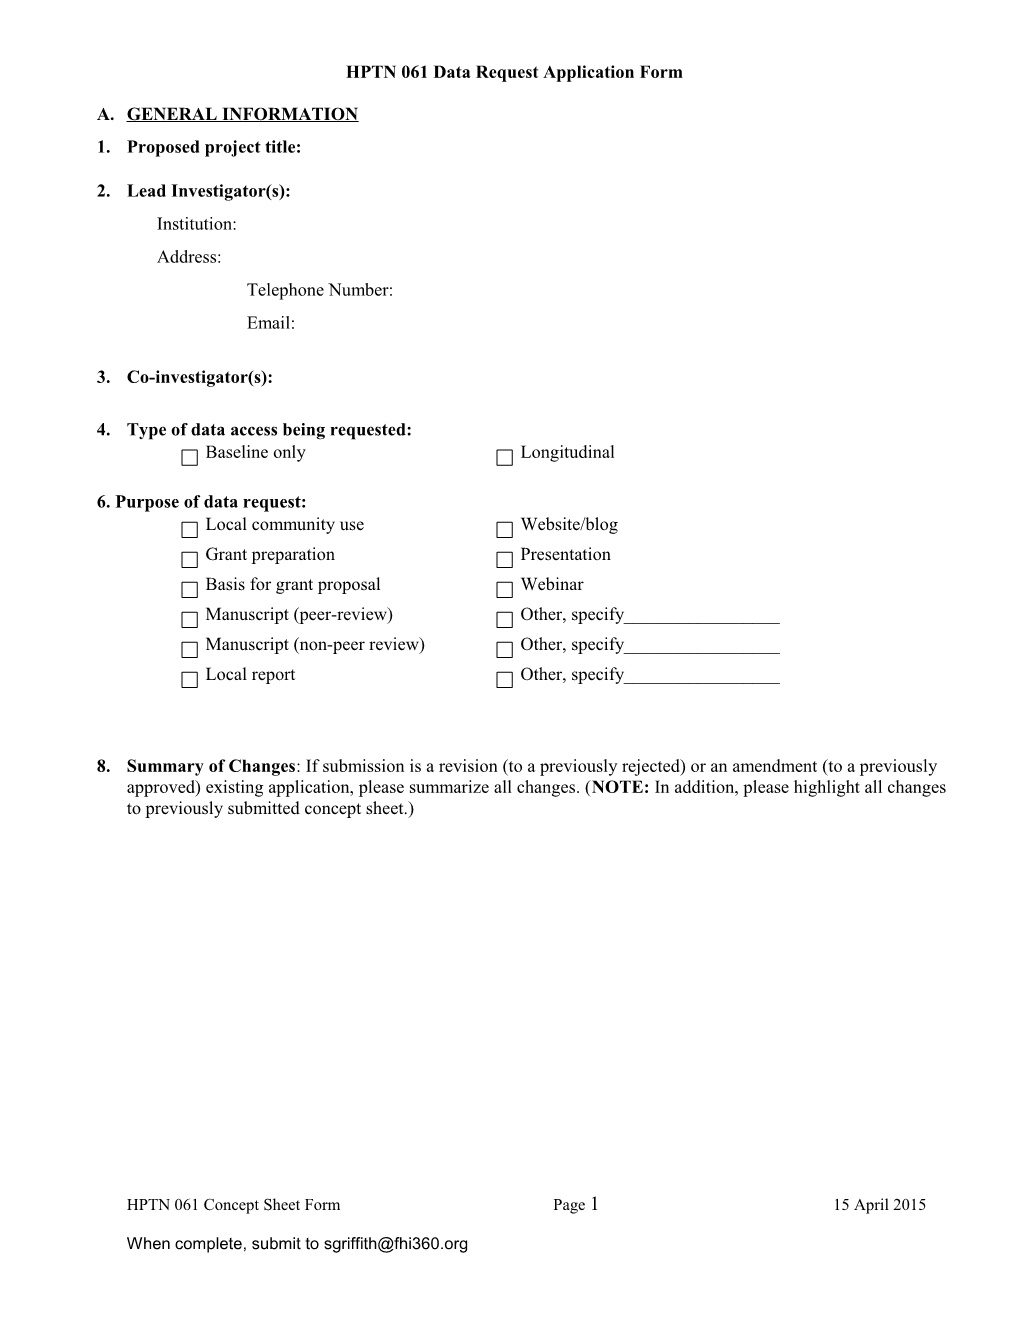 HPTN 061 Data Request Application Form